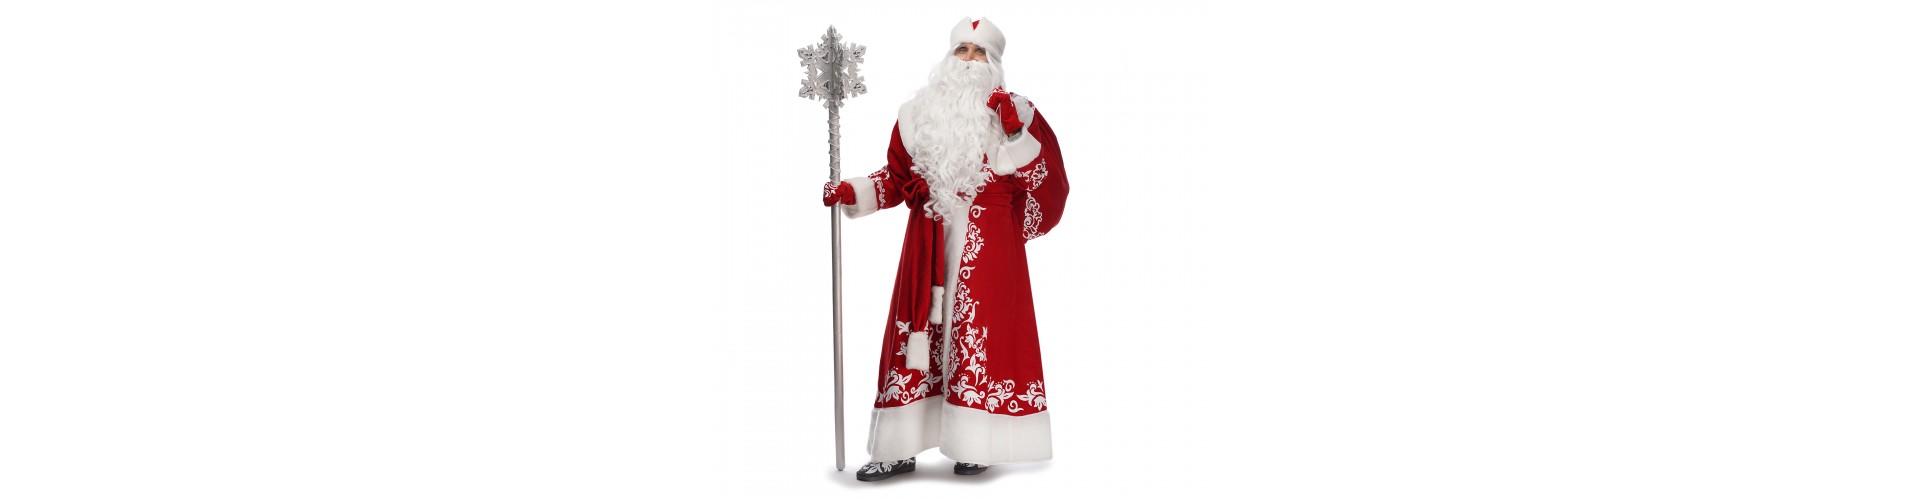 Santa Claus costume - clothes that do wonders